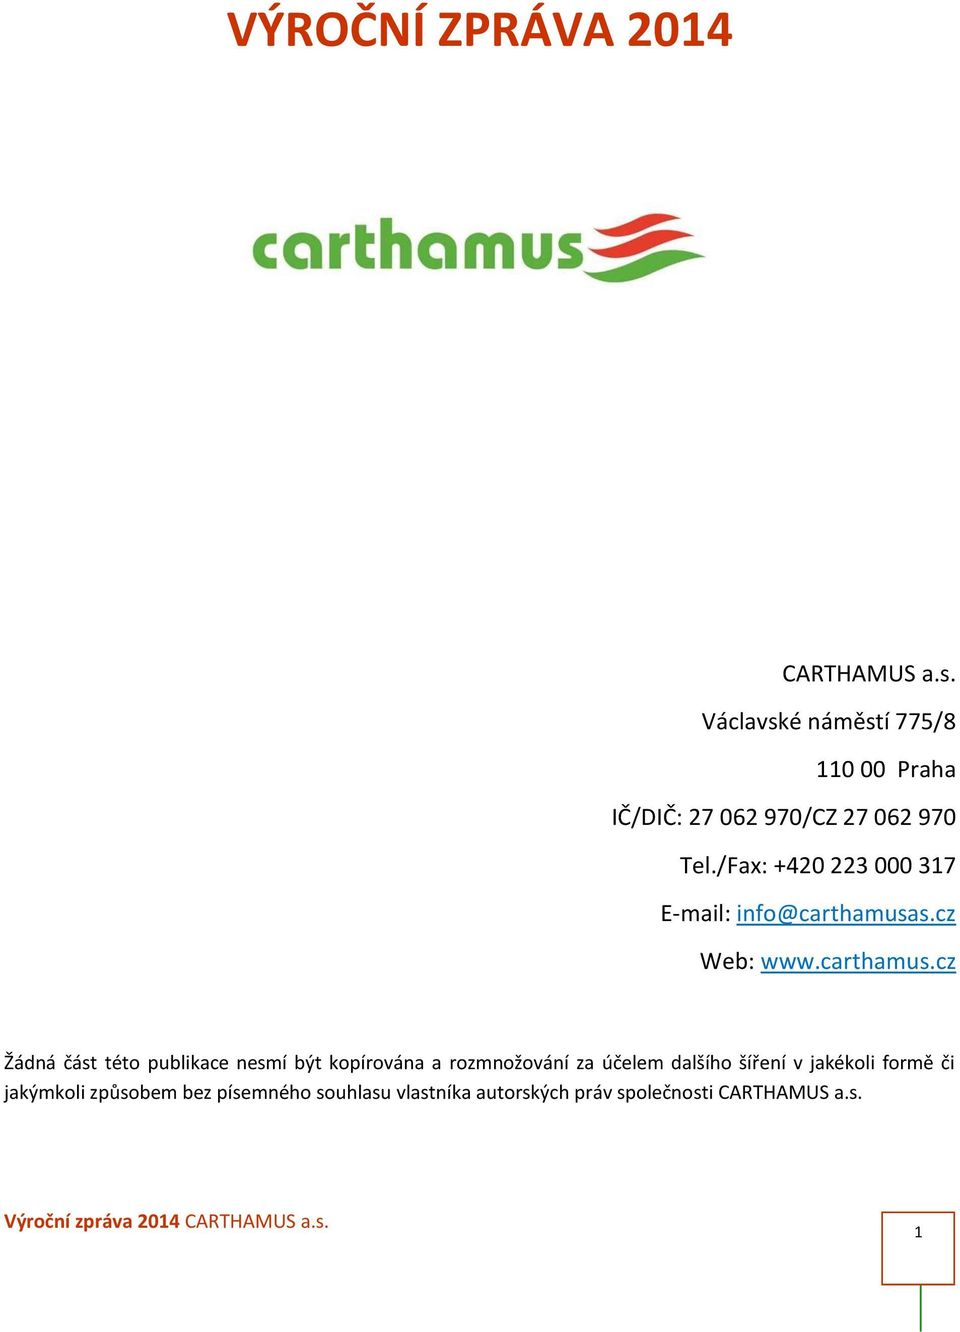 /Fax: +420 223 000 317 E-mail: info@carthamusa